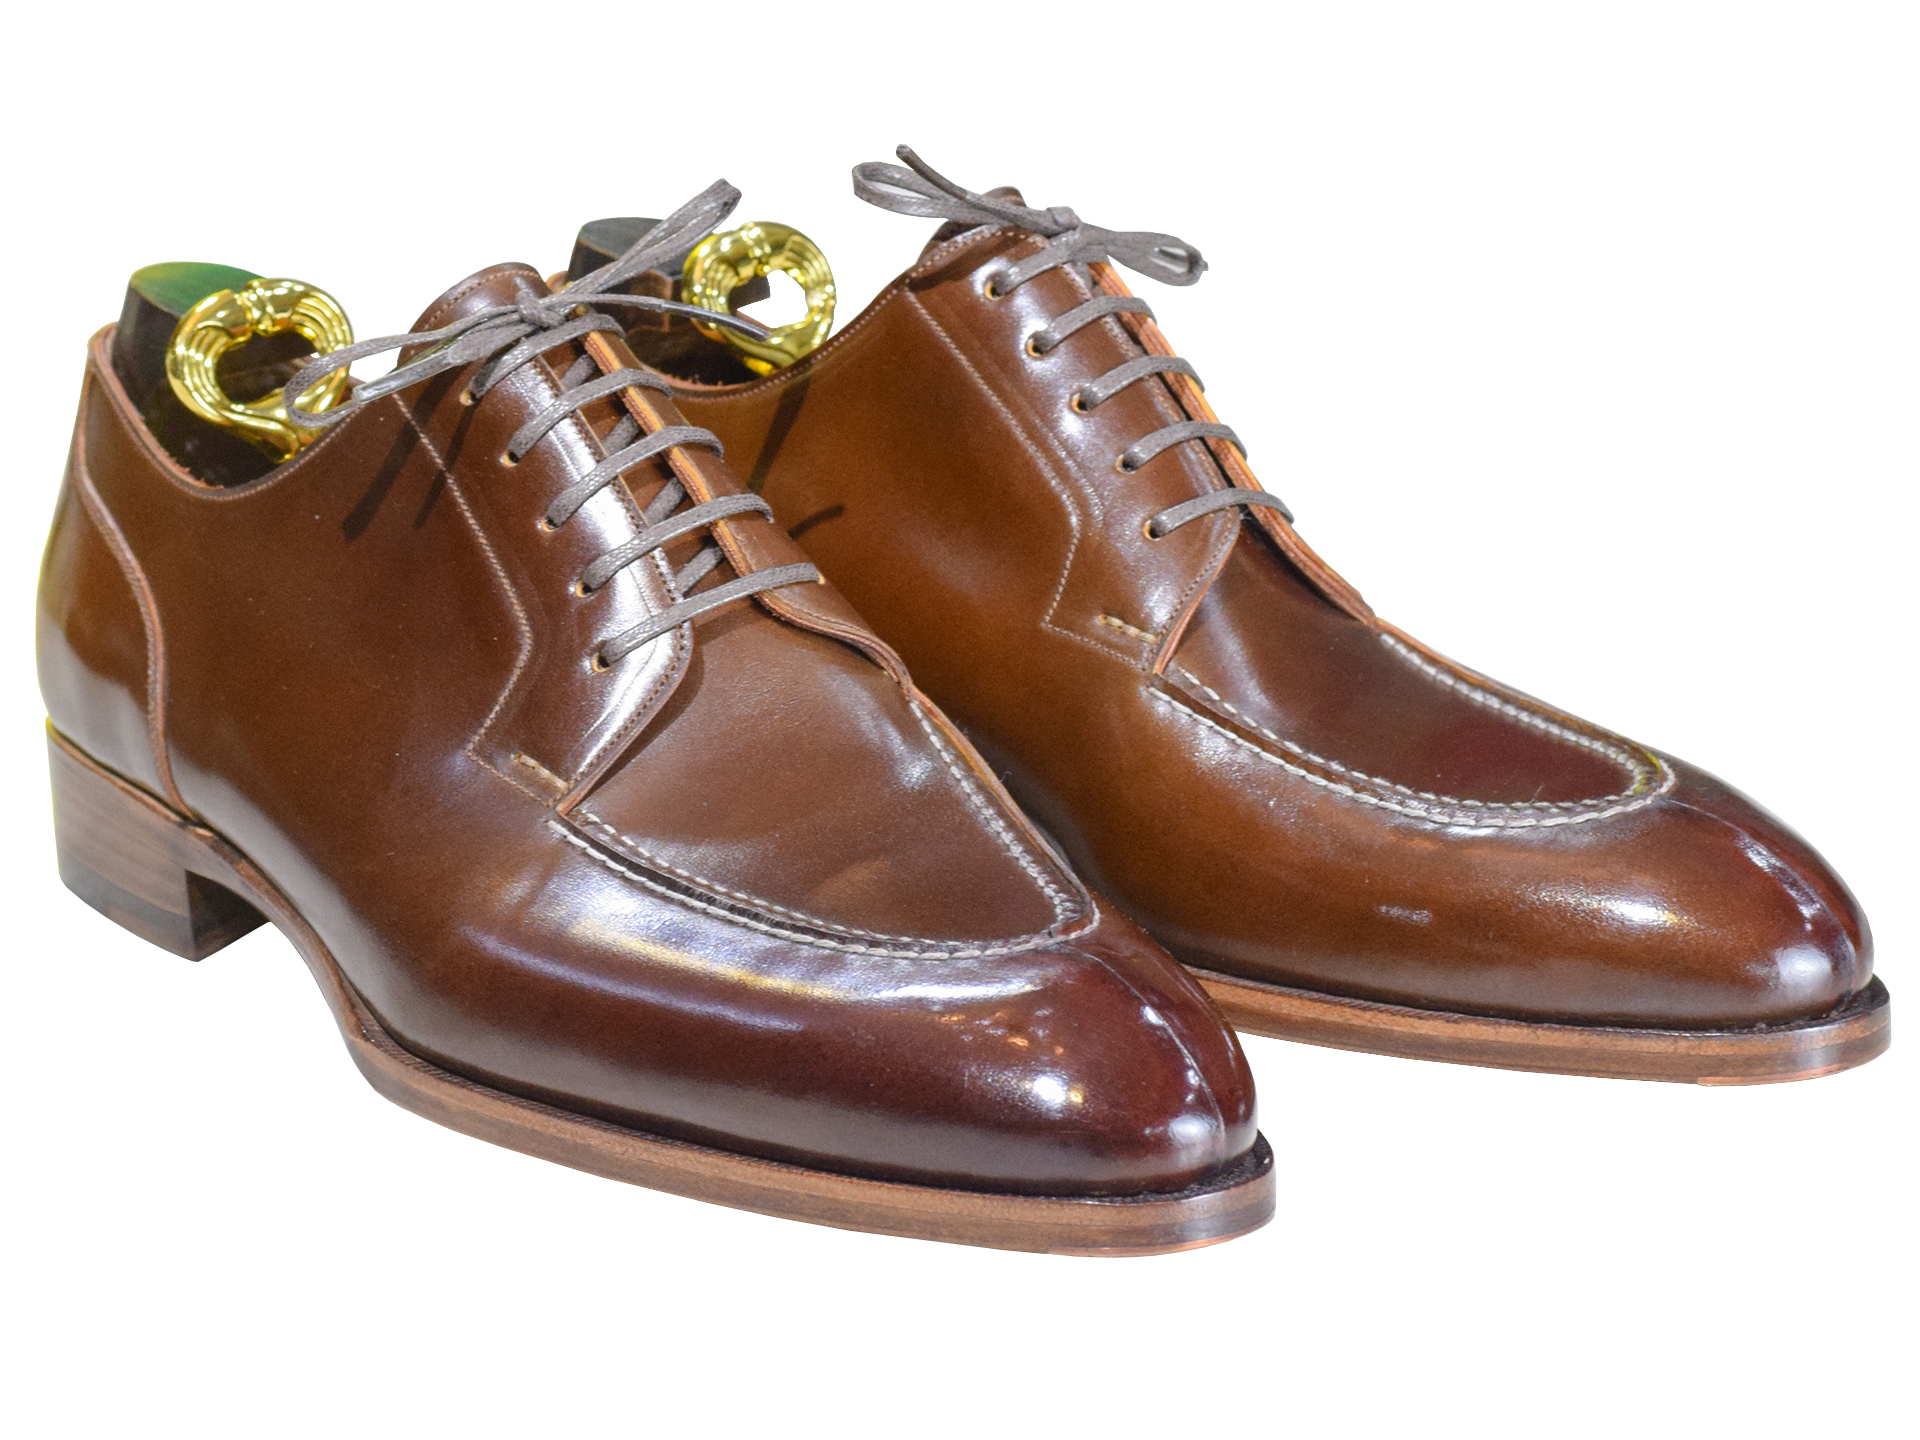 MTO Split toe shoes - Shell Cordovan leather